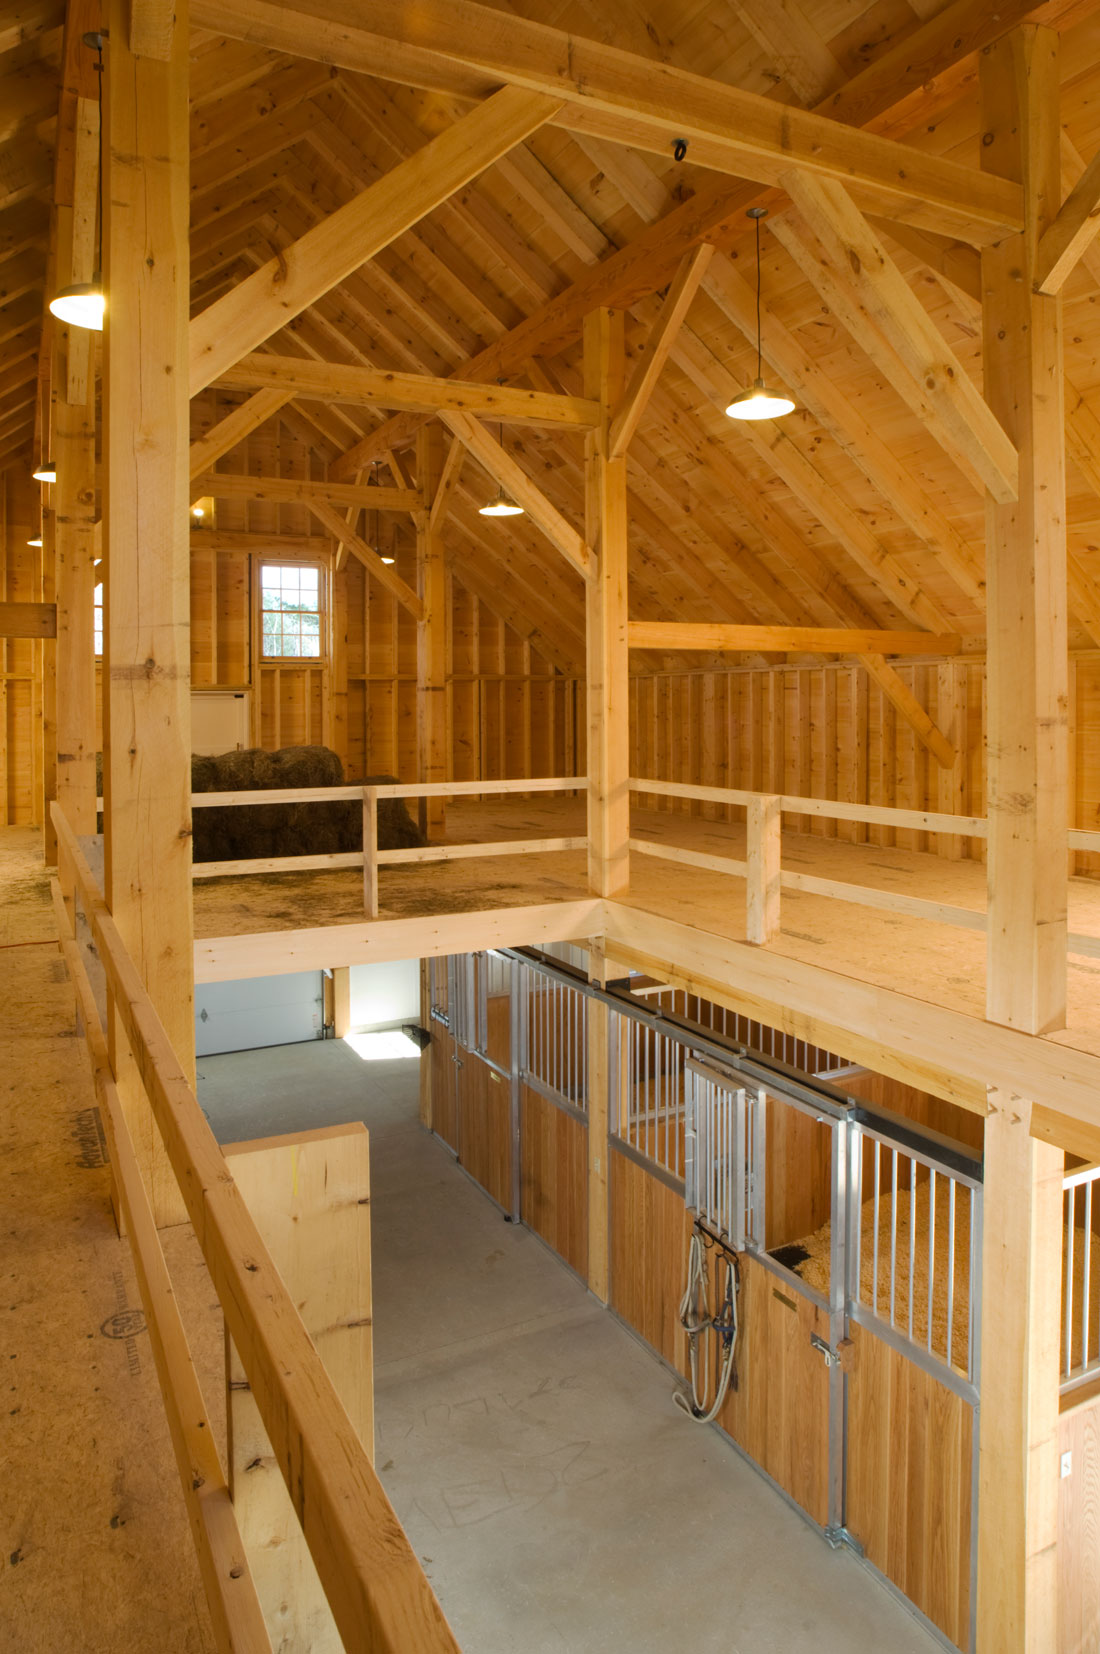 Houses and Barns | Cumberland horse barn